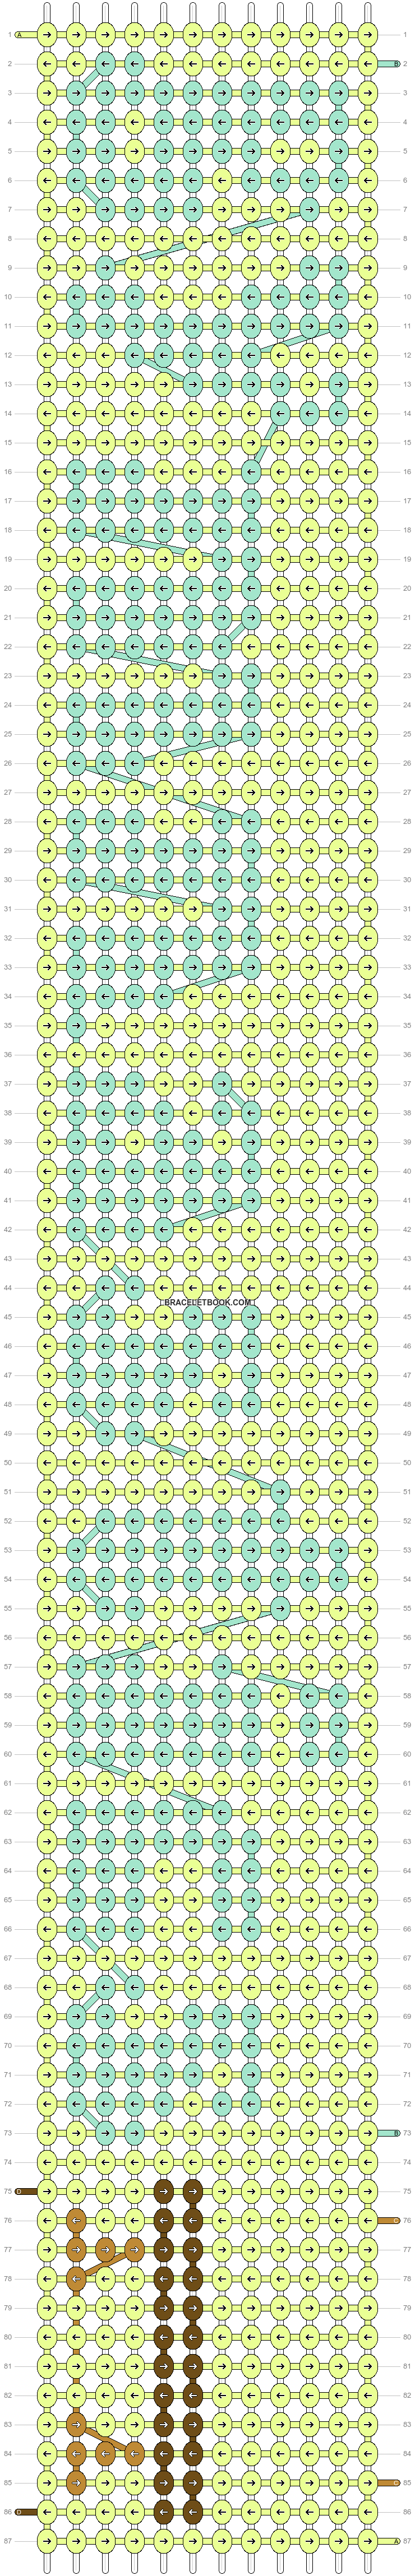 Alpha pattern #60453 variation #110558 pattern